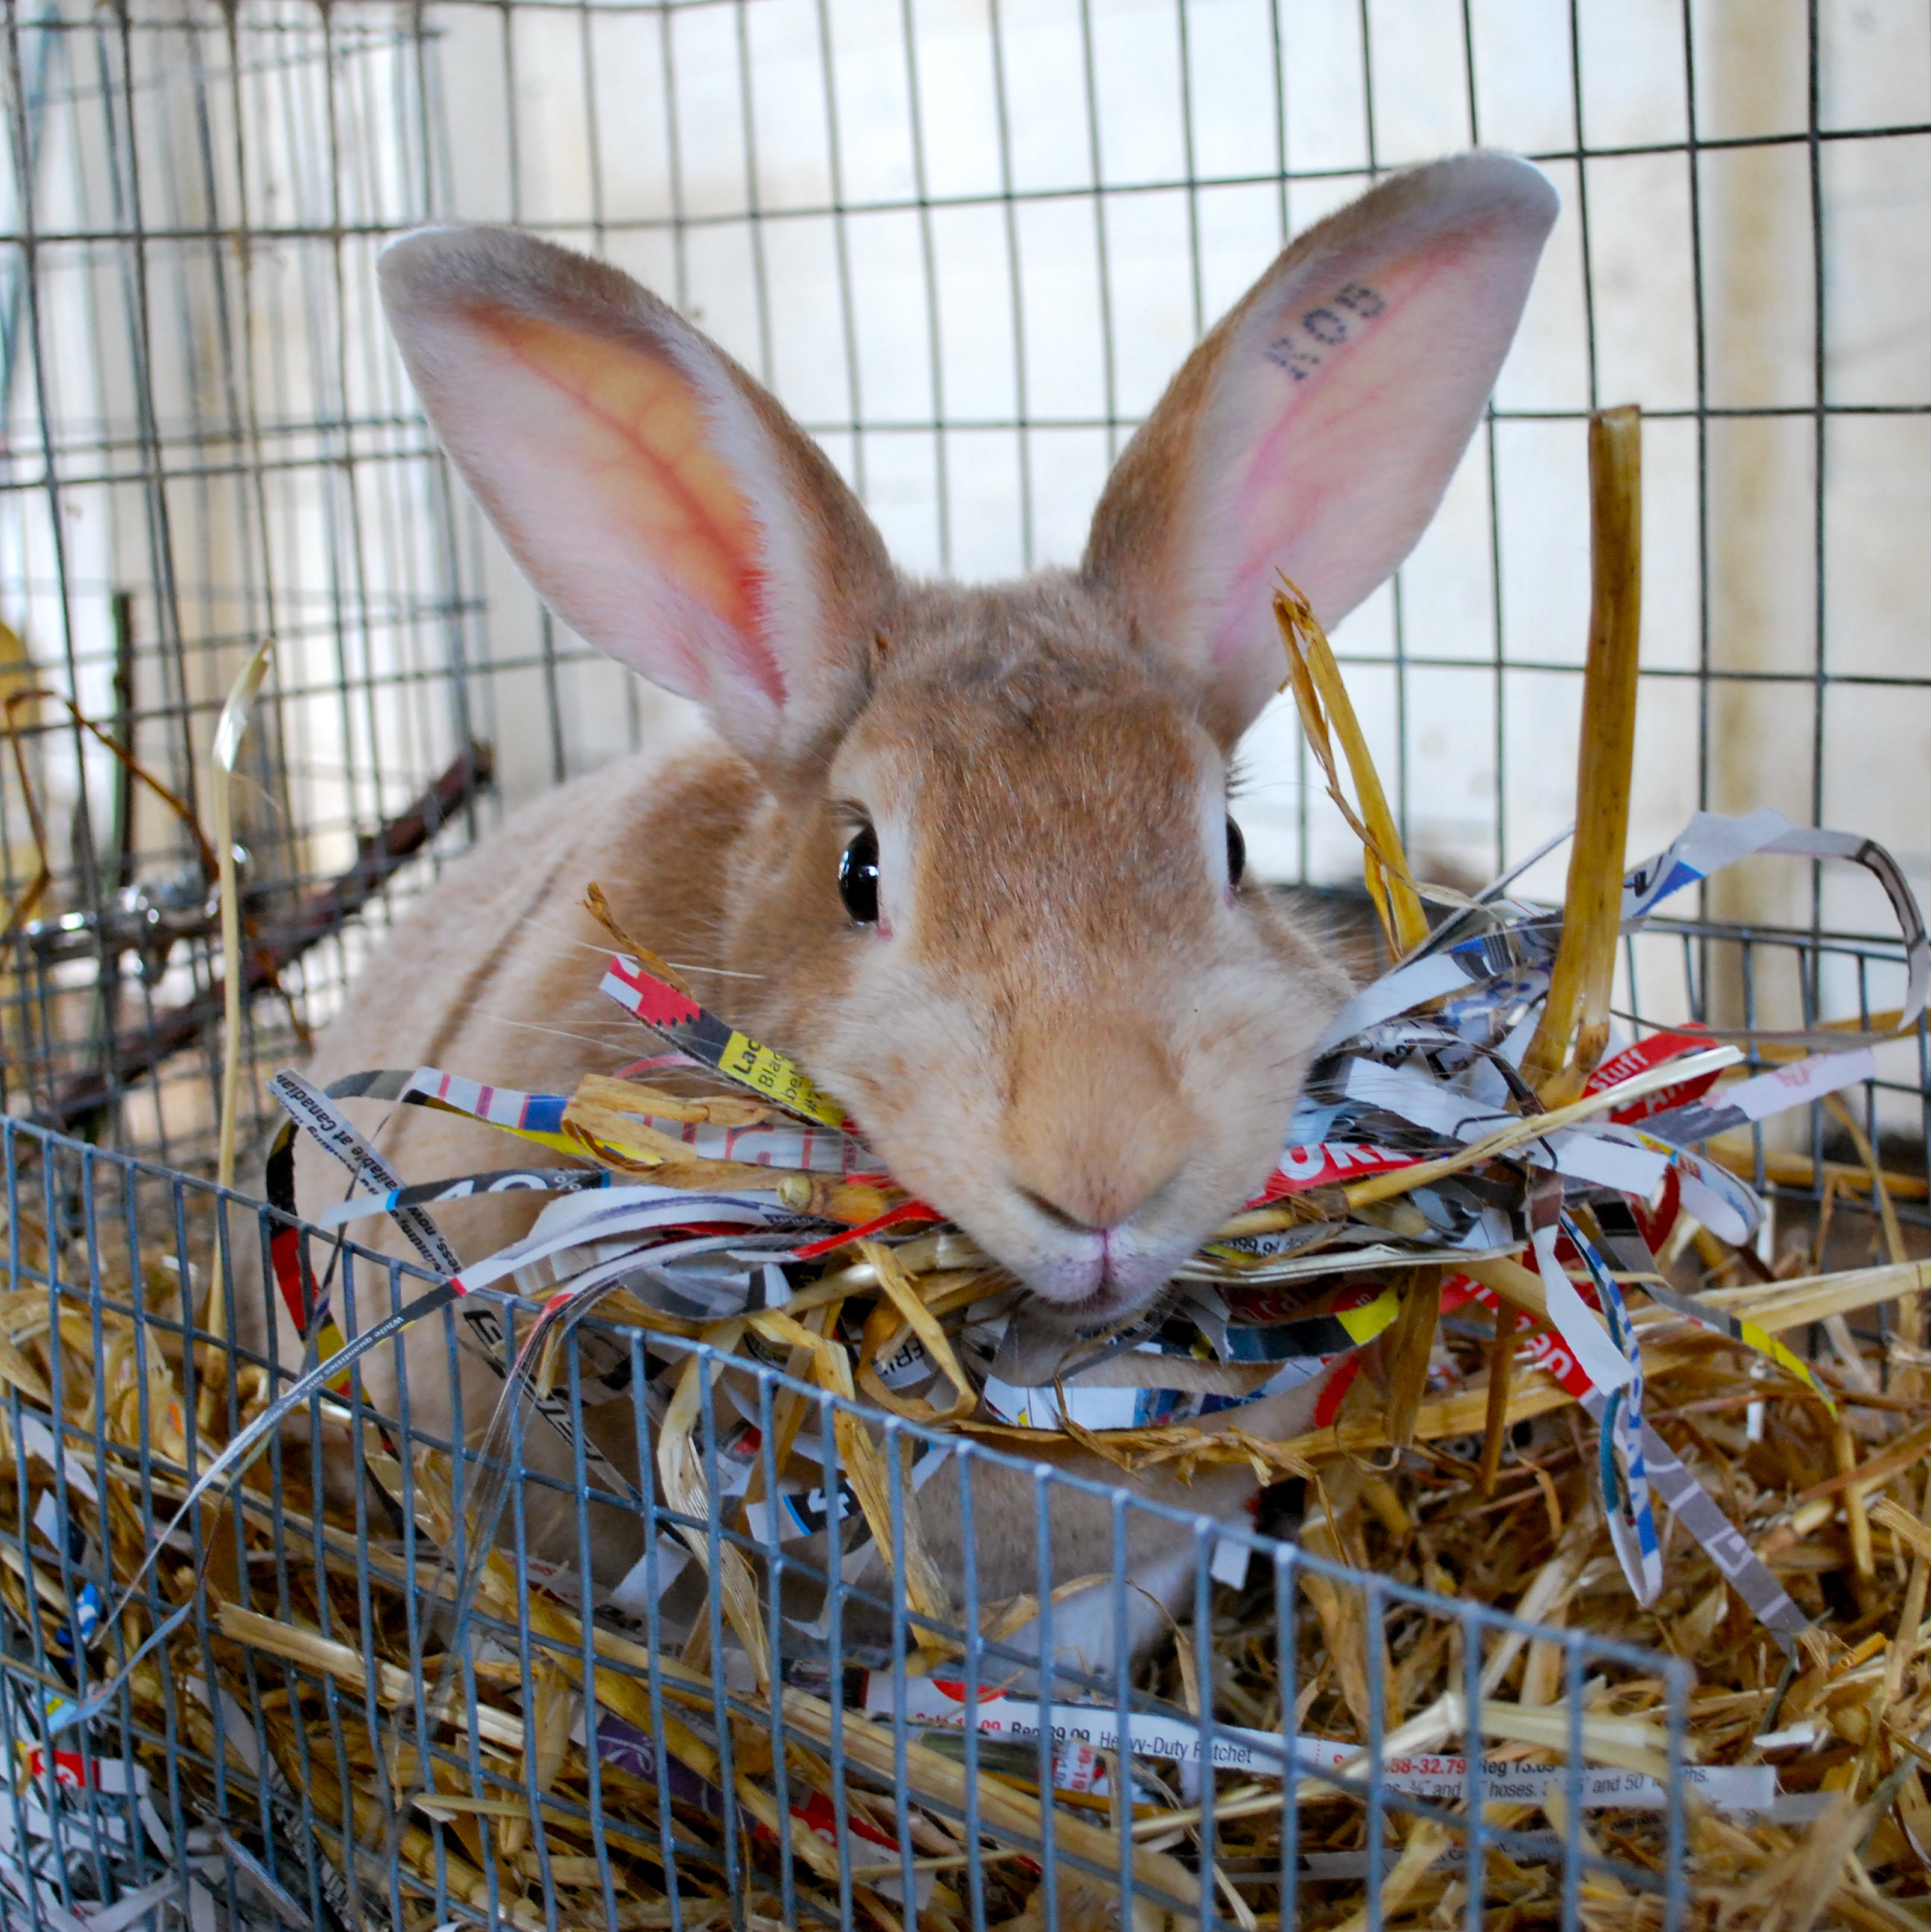 Rabbit-Friendly Materials For Nest-Building